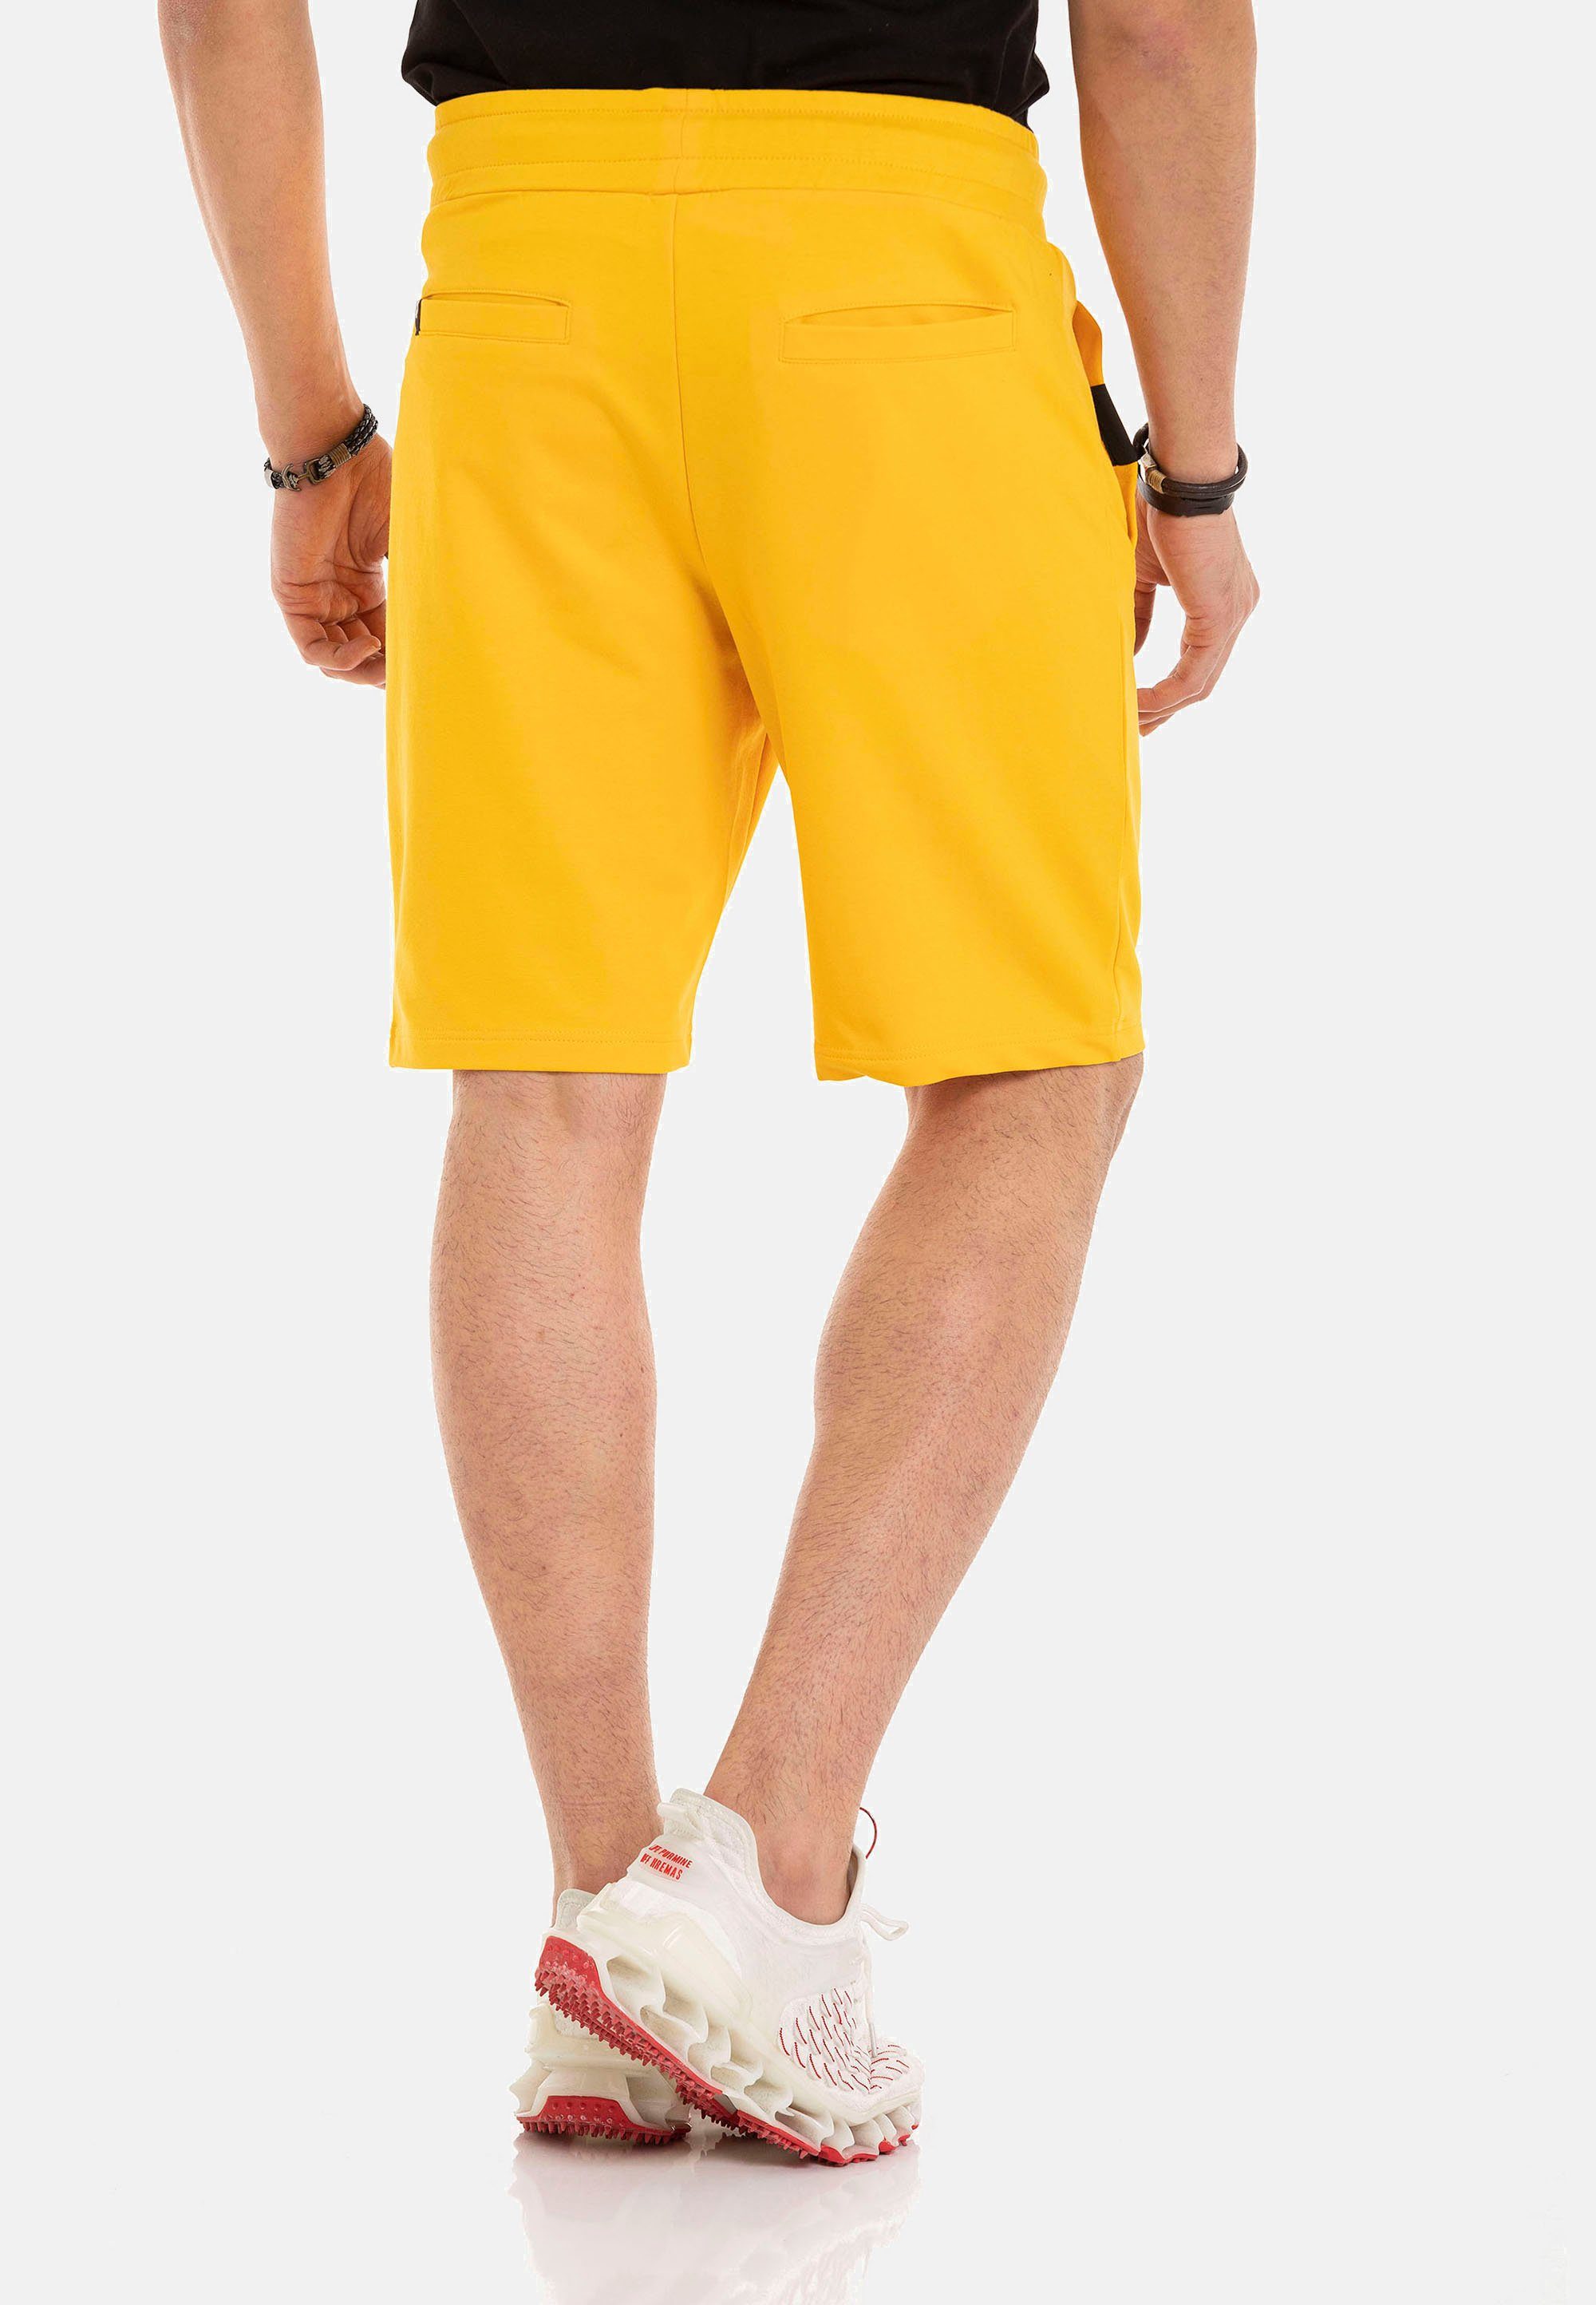 Cipo & Baxx Shorts gelb in sportlichem Look